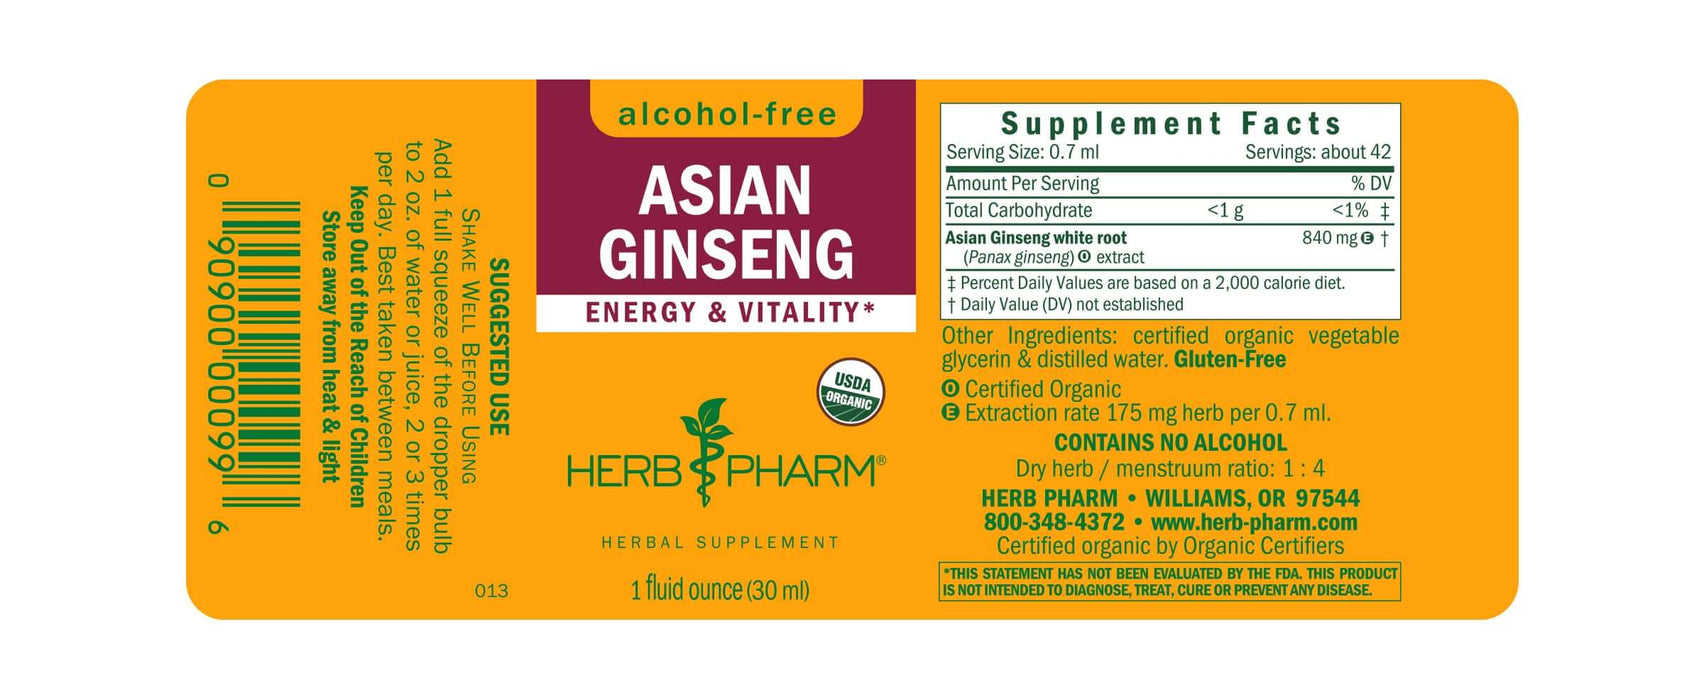 Asian Ginseng, Alcohol-Free